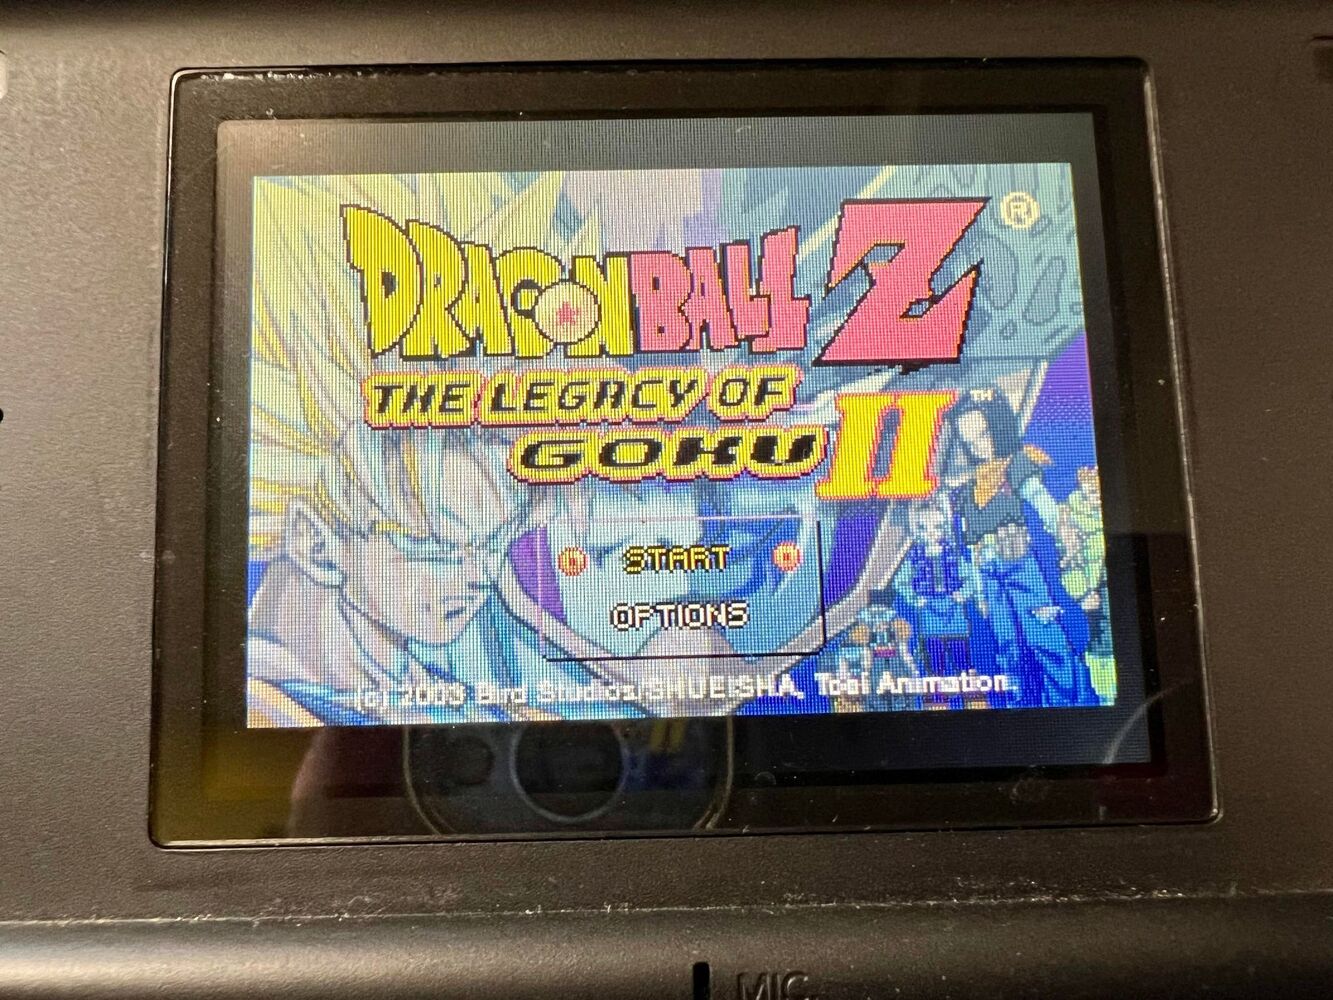 Nintendo Game Boy Advance Dragon Ball Z The Legacy of Goku I & II